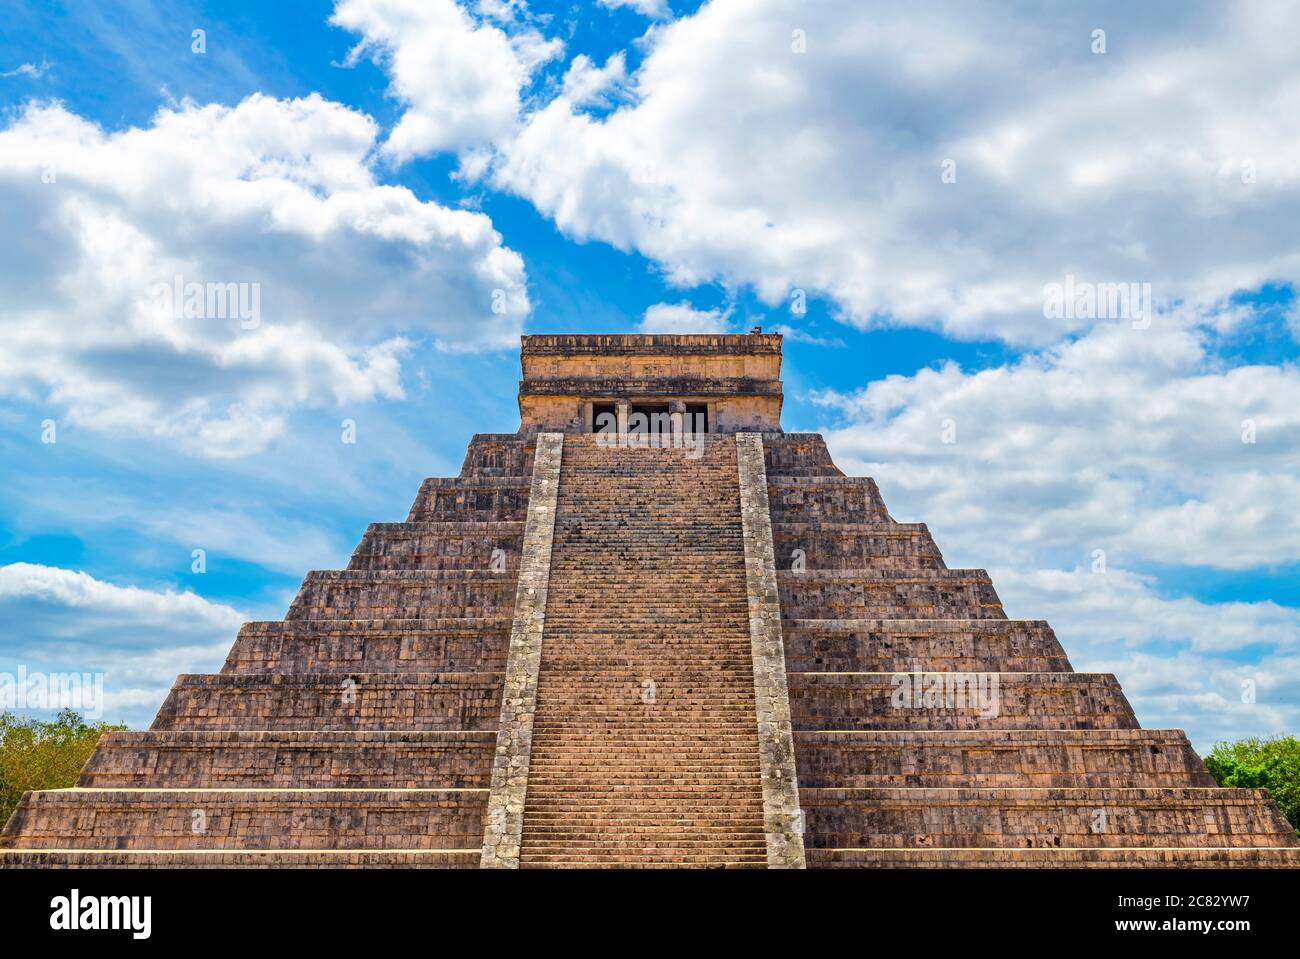 La pyramide du temple Maya d'El Castillo ou Kukulkan dans le site archéologique de Chichen Itza, Yucatan, Mexique. Banque D'Images